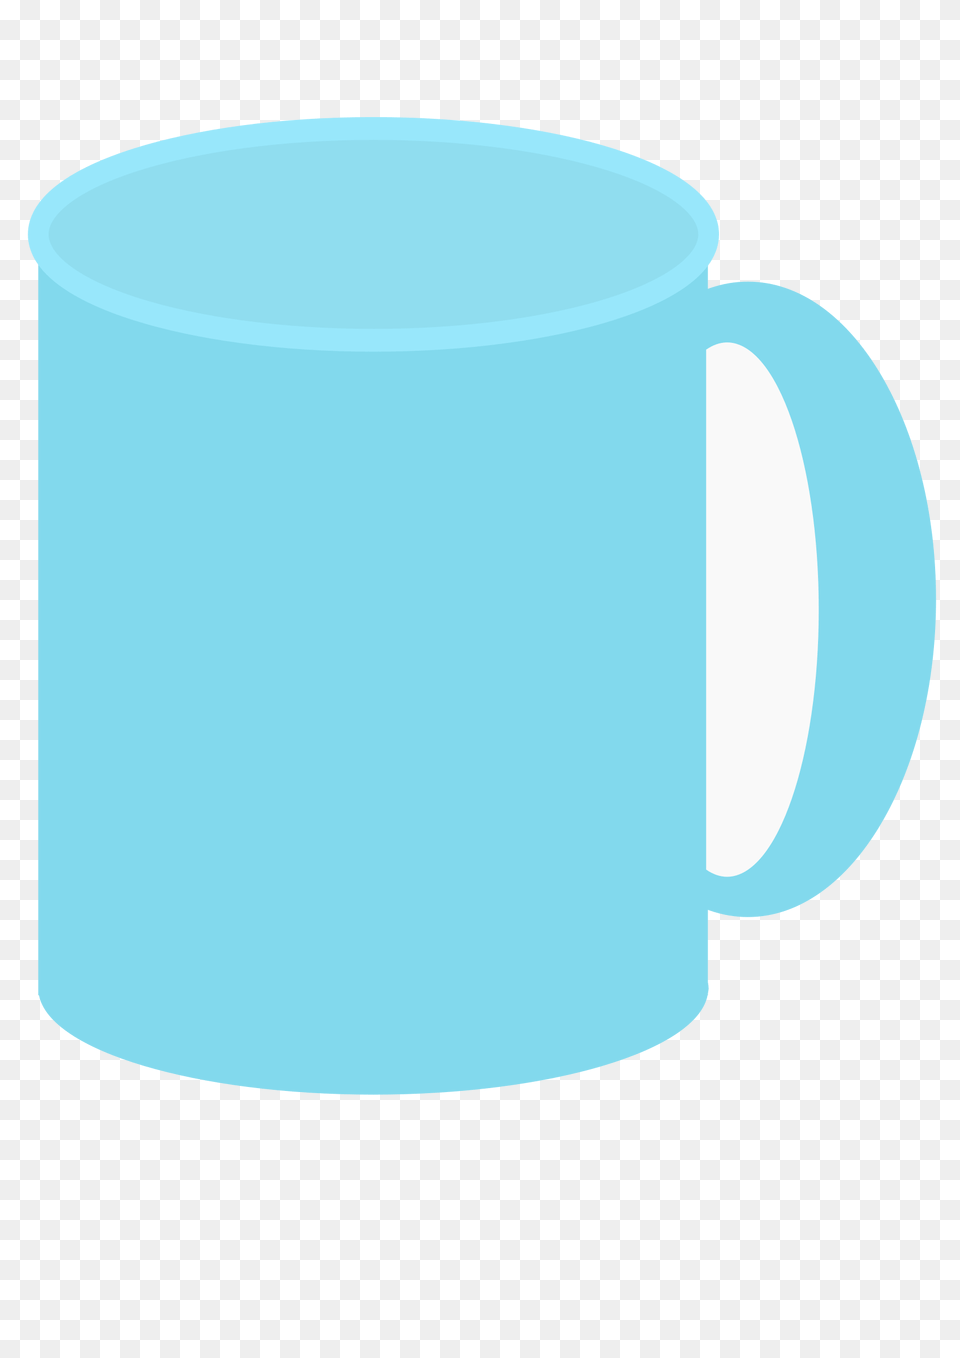 Simple Mug Icons, Cup, Beverage, Coffee, Coffee Cup Png